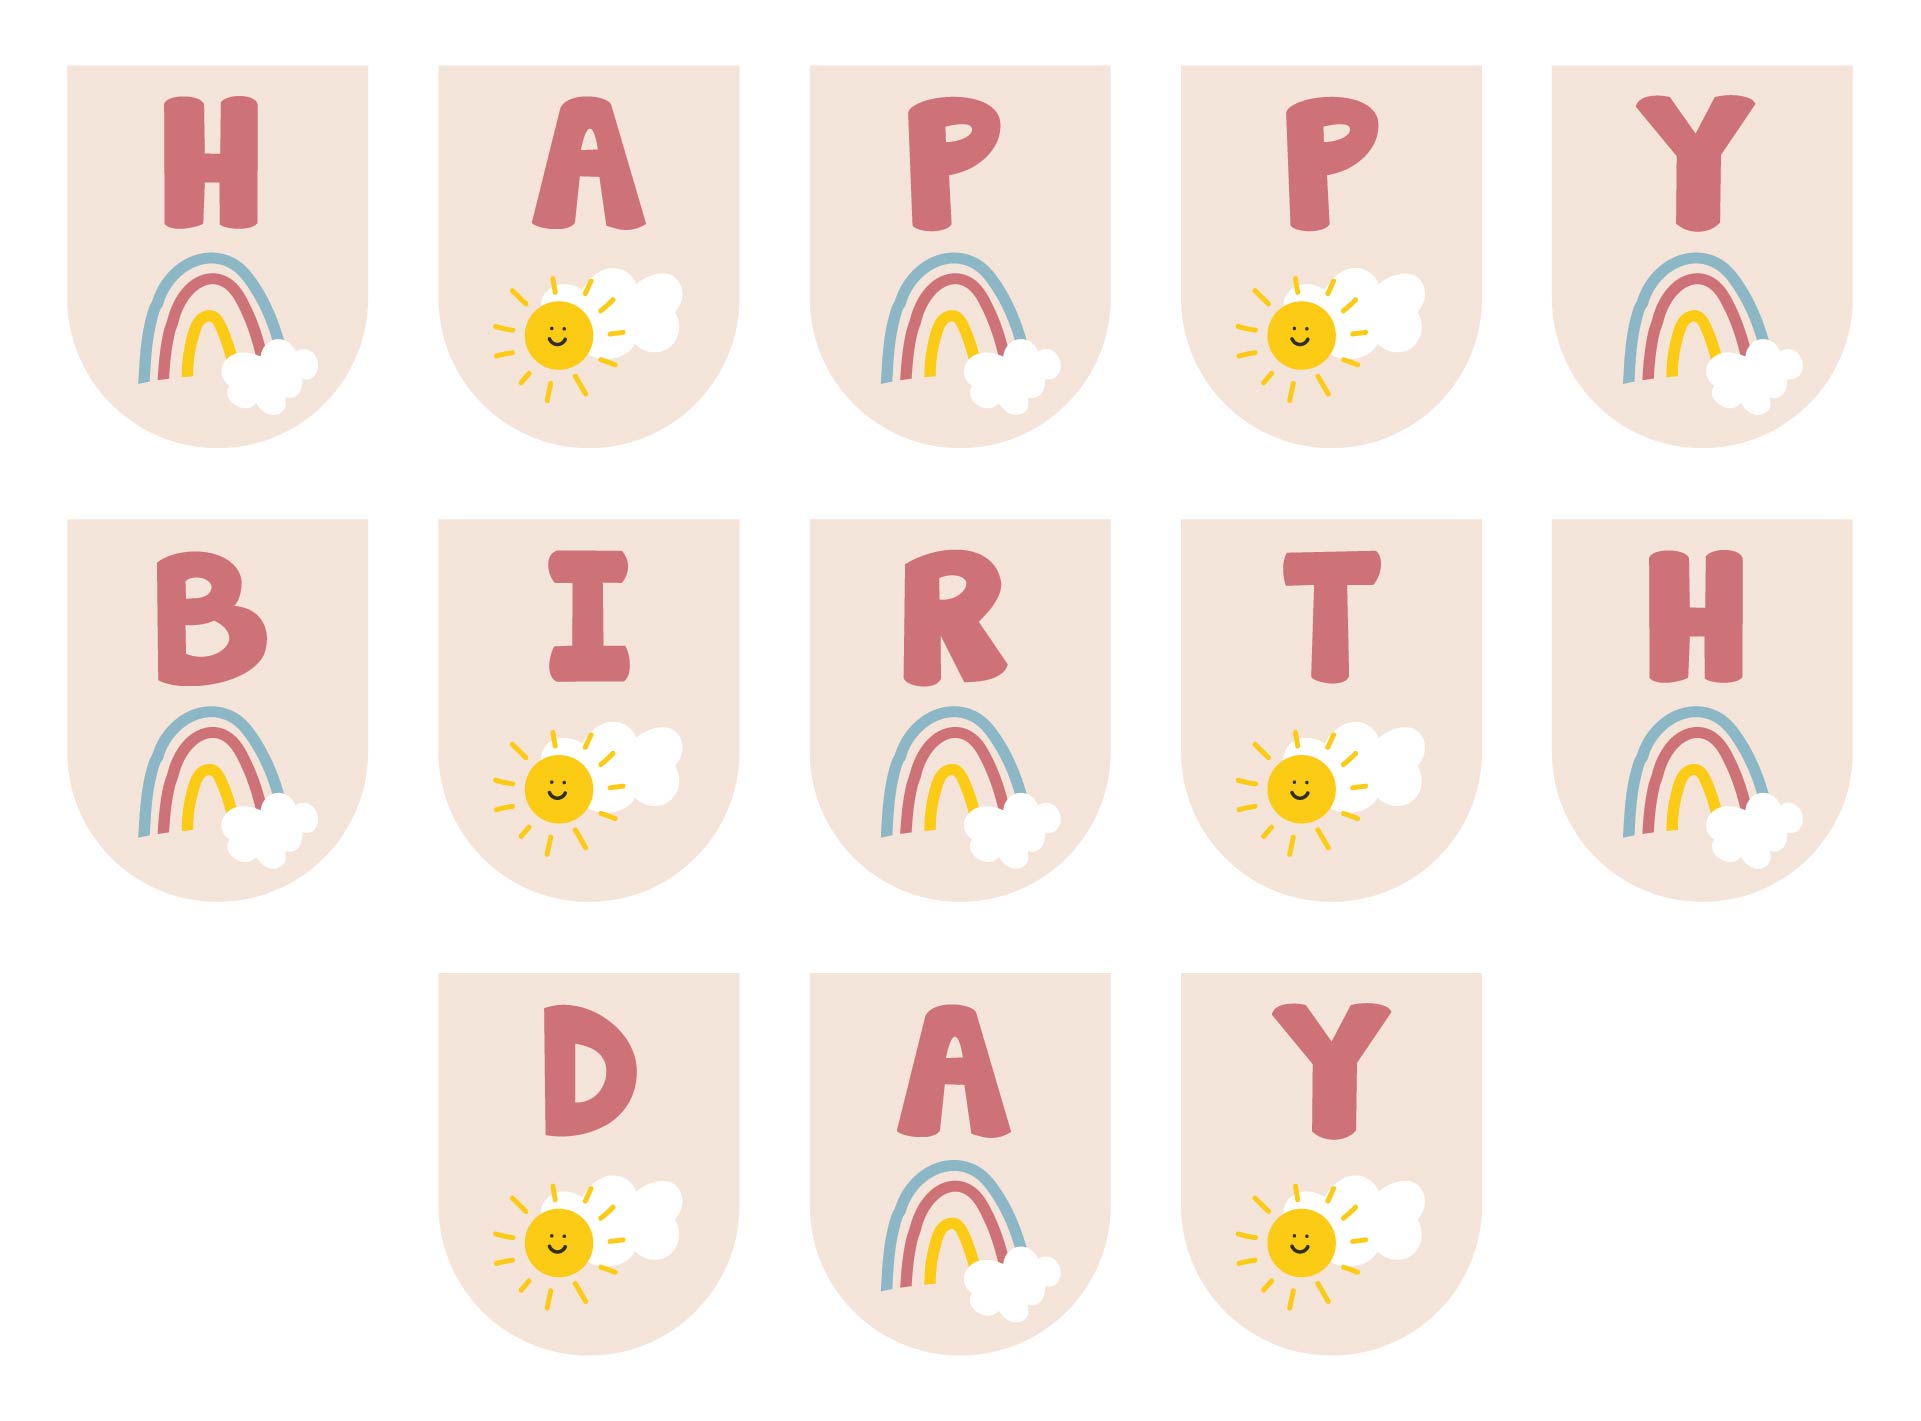 Rainbow Happy Birthday Banner Printable